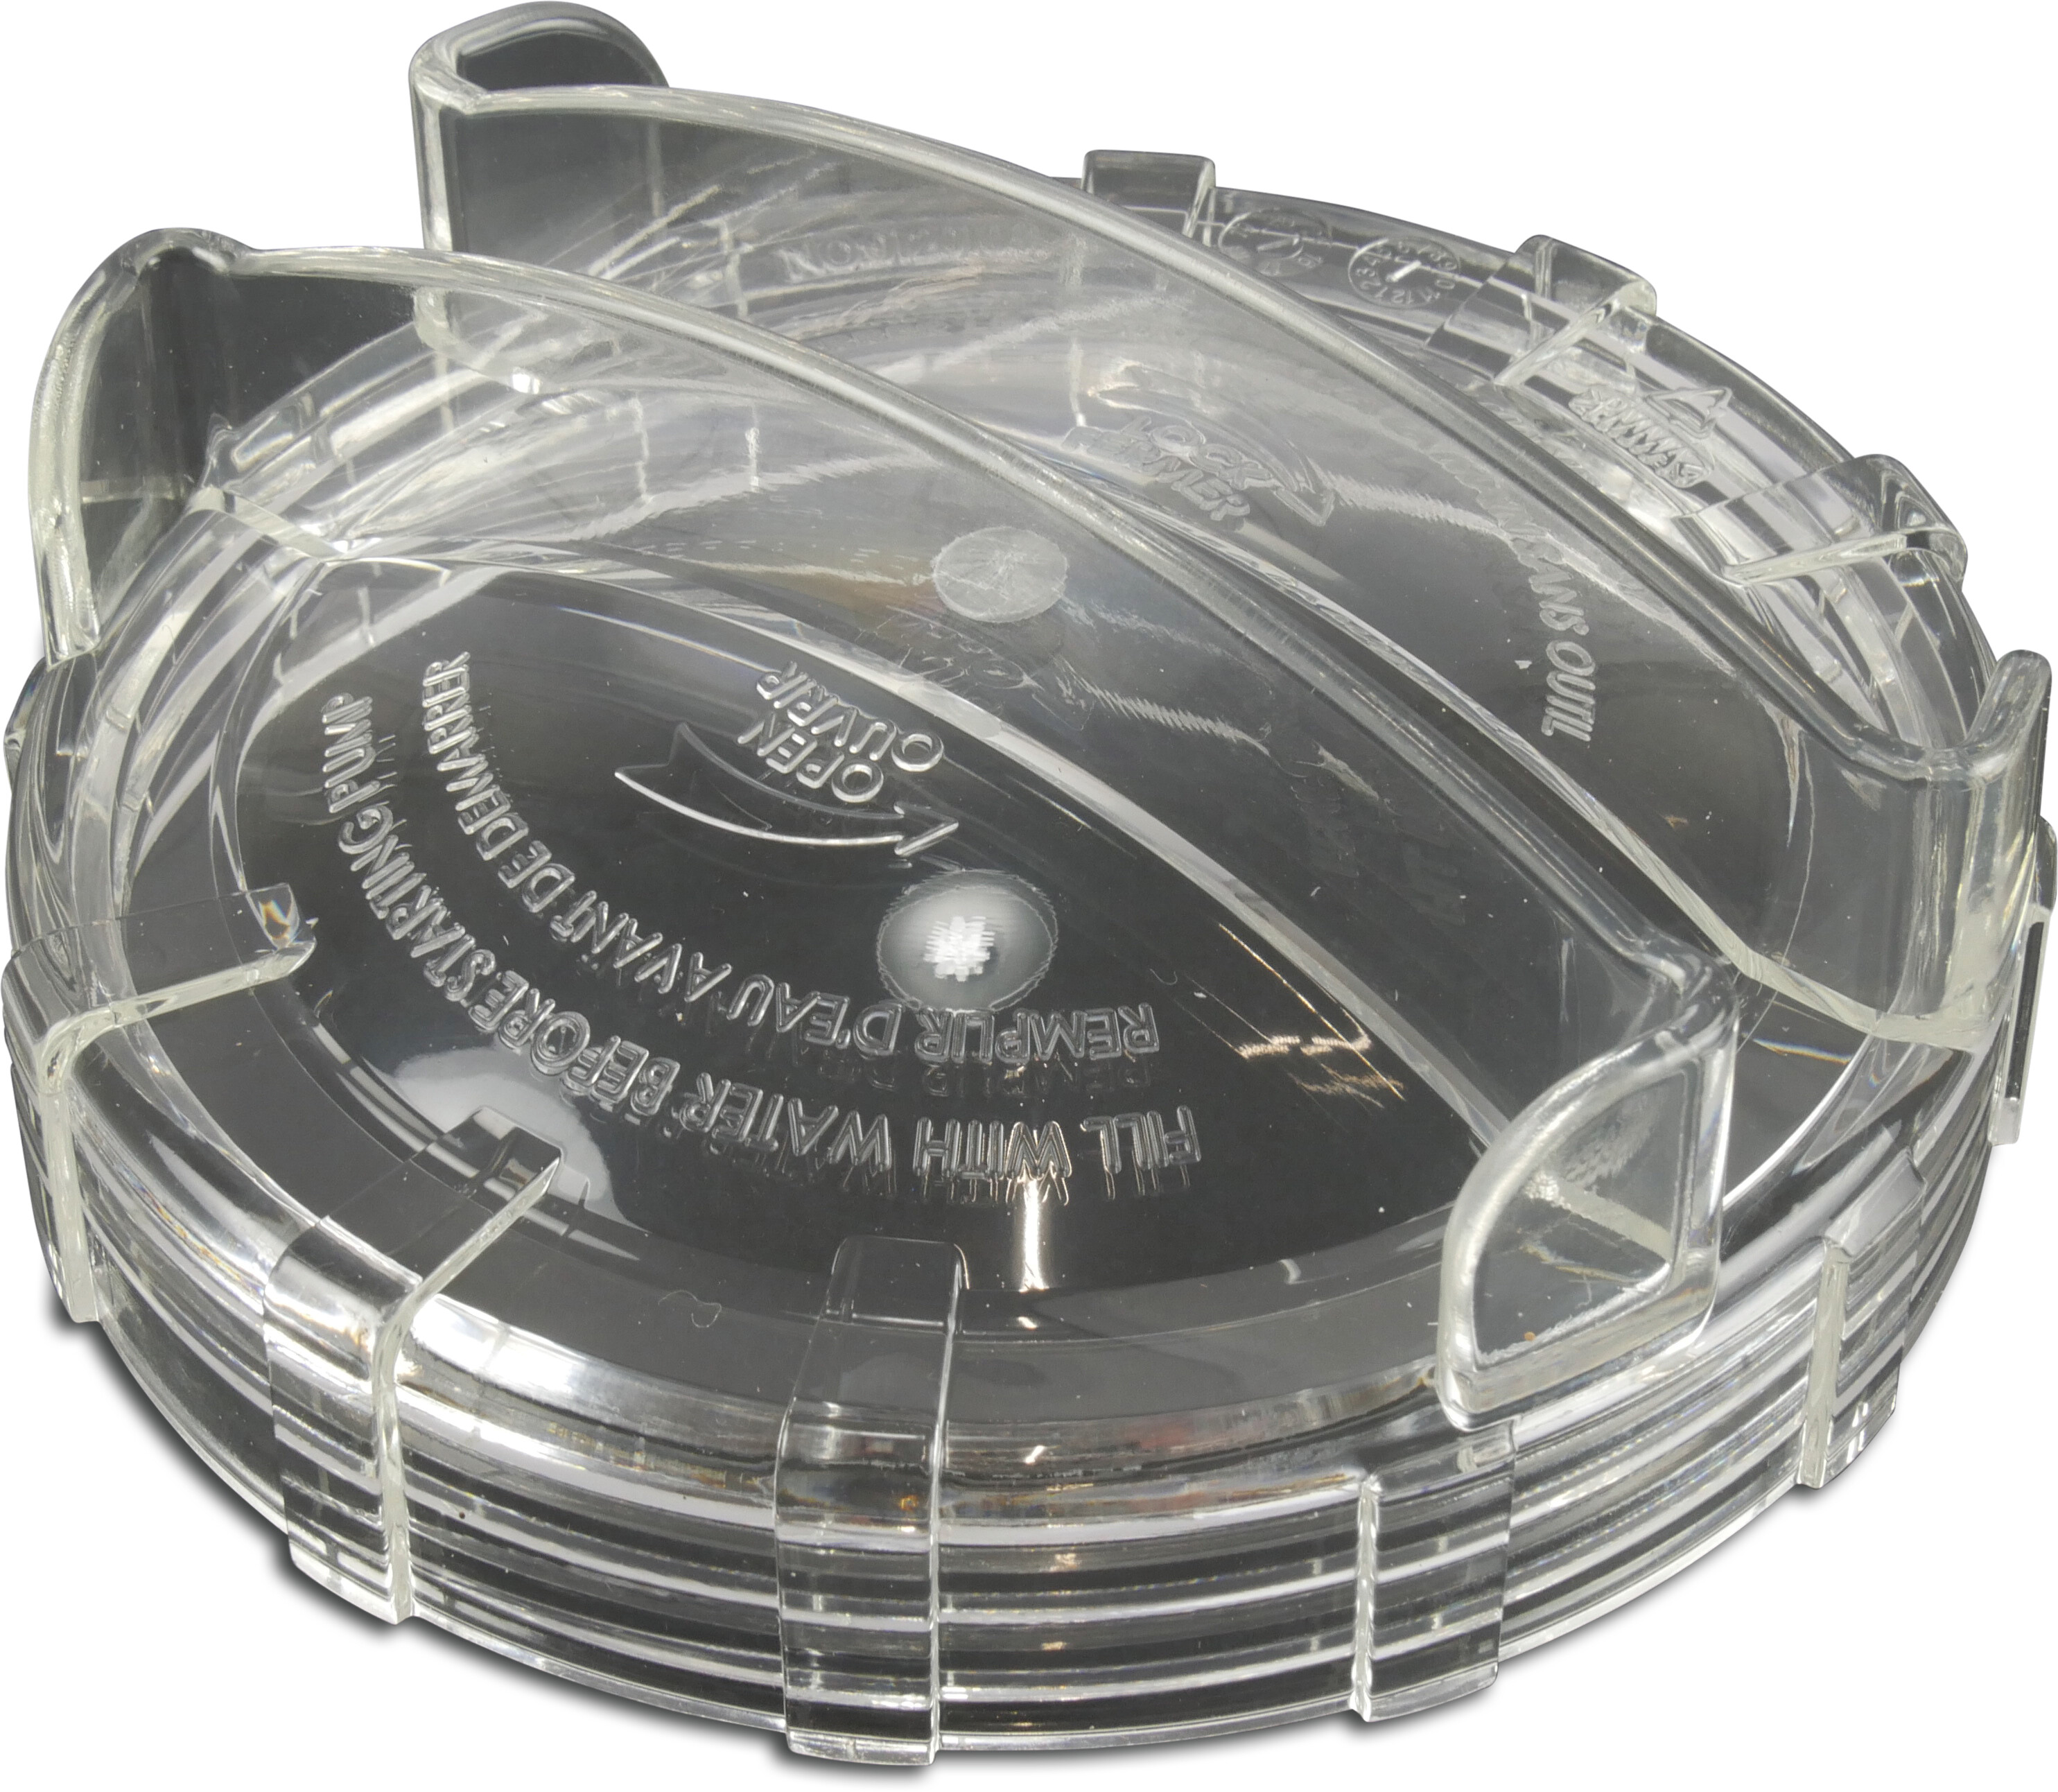 Transparent lid for SS pump